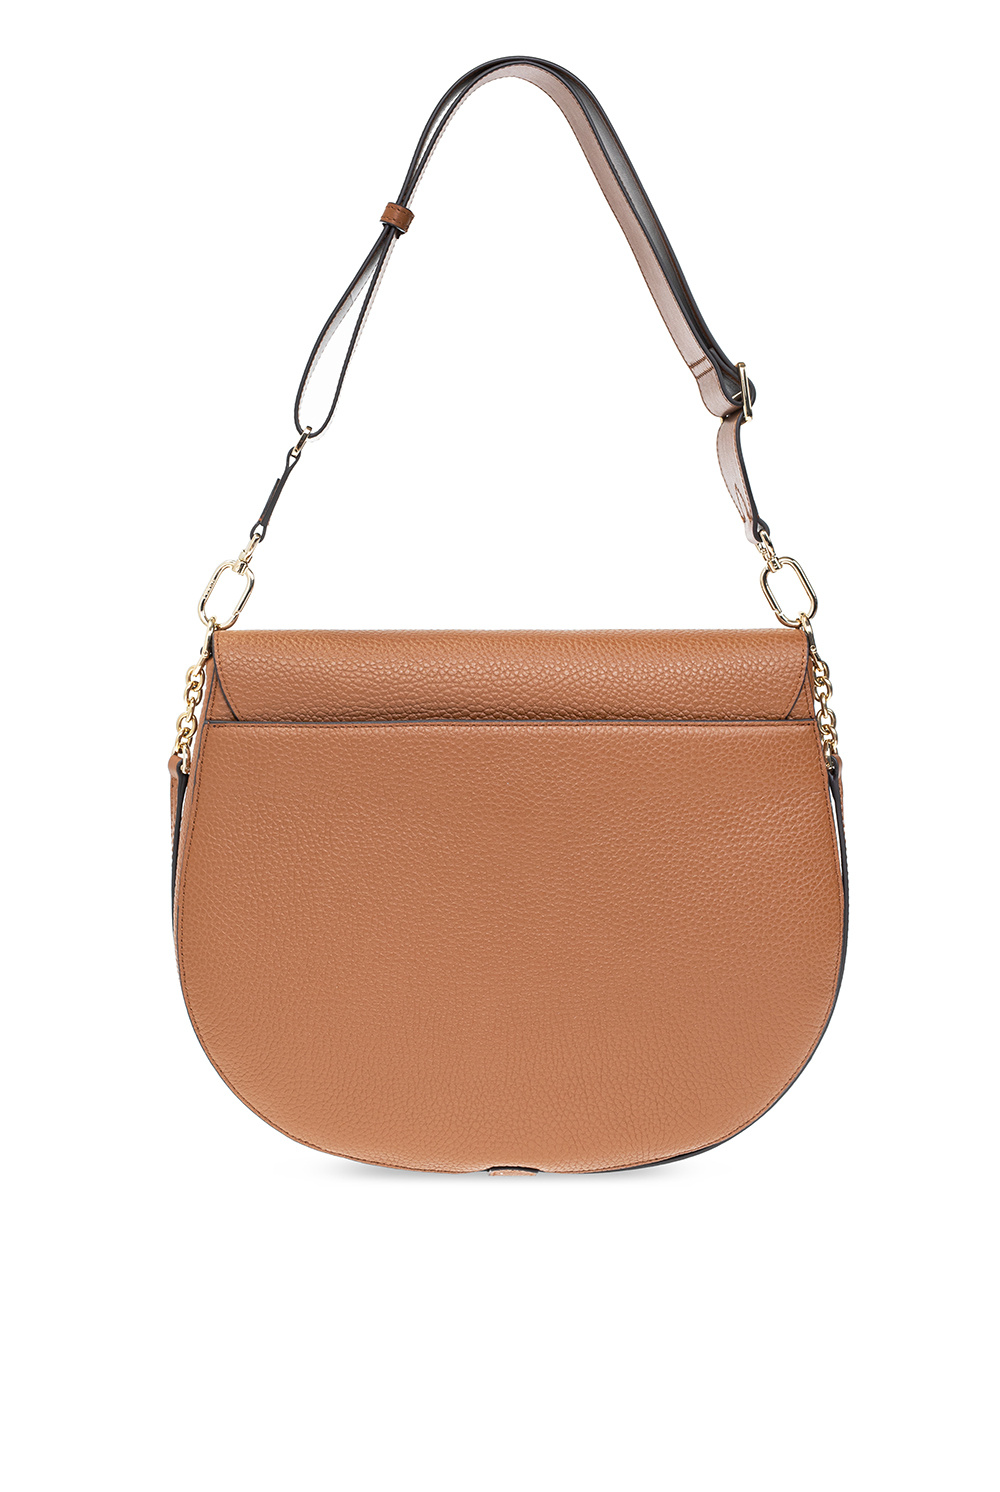 Furla ‘Club 2 M’ shoulder quilted bag